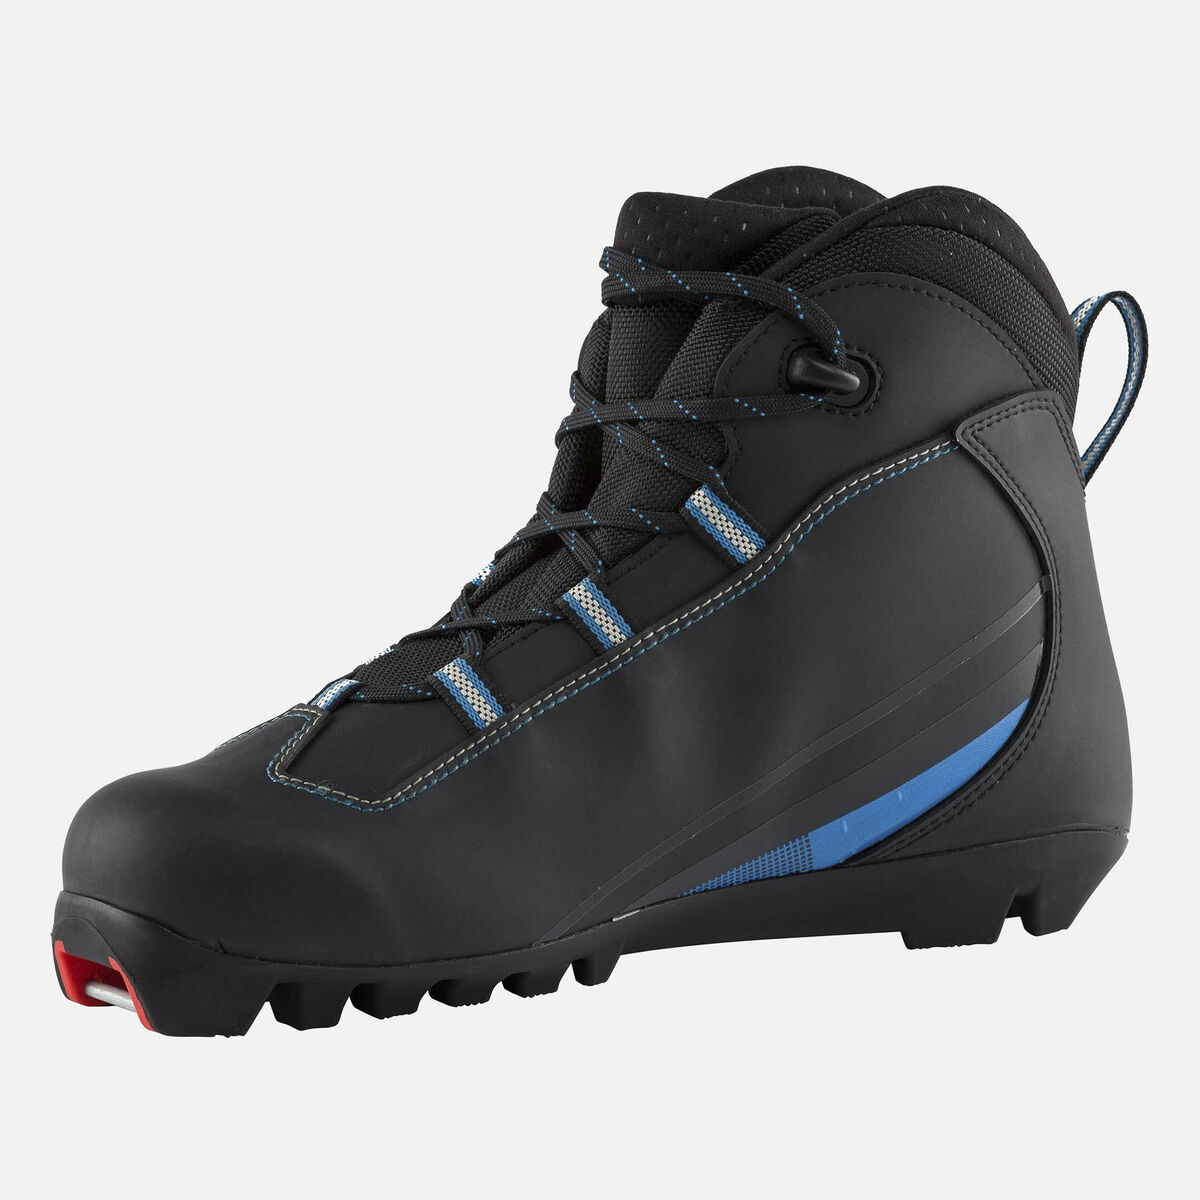 Rossignol Chaussures de ski nordique Touring Femme Boots X-1 Fw multicolor